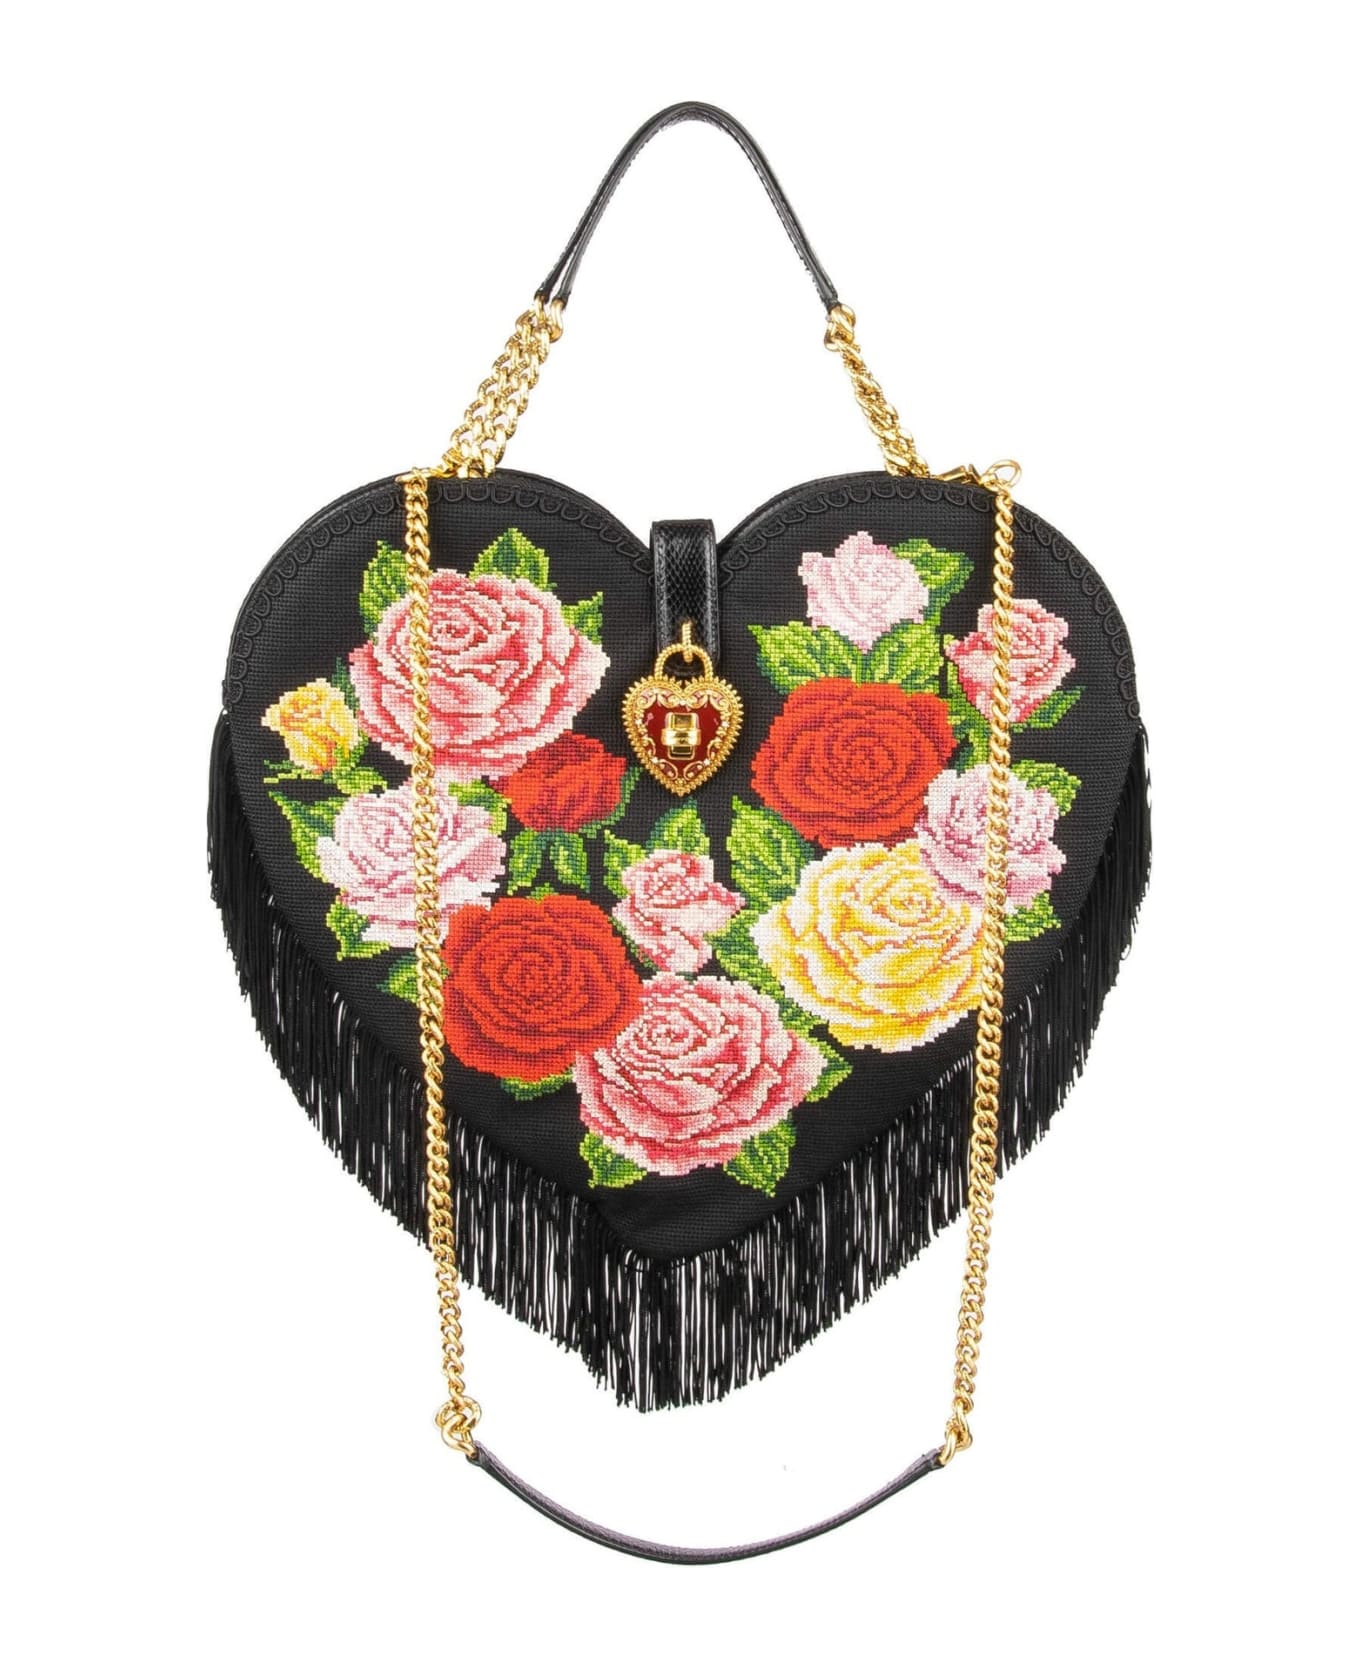 Dolce & Gabbana My Heart Crochet Bag - Black